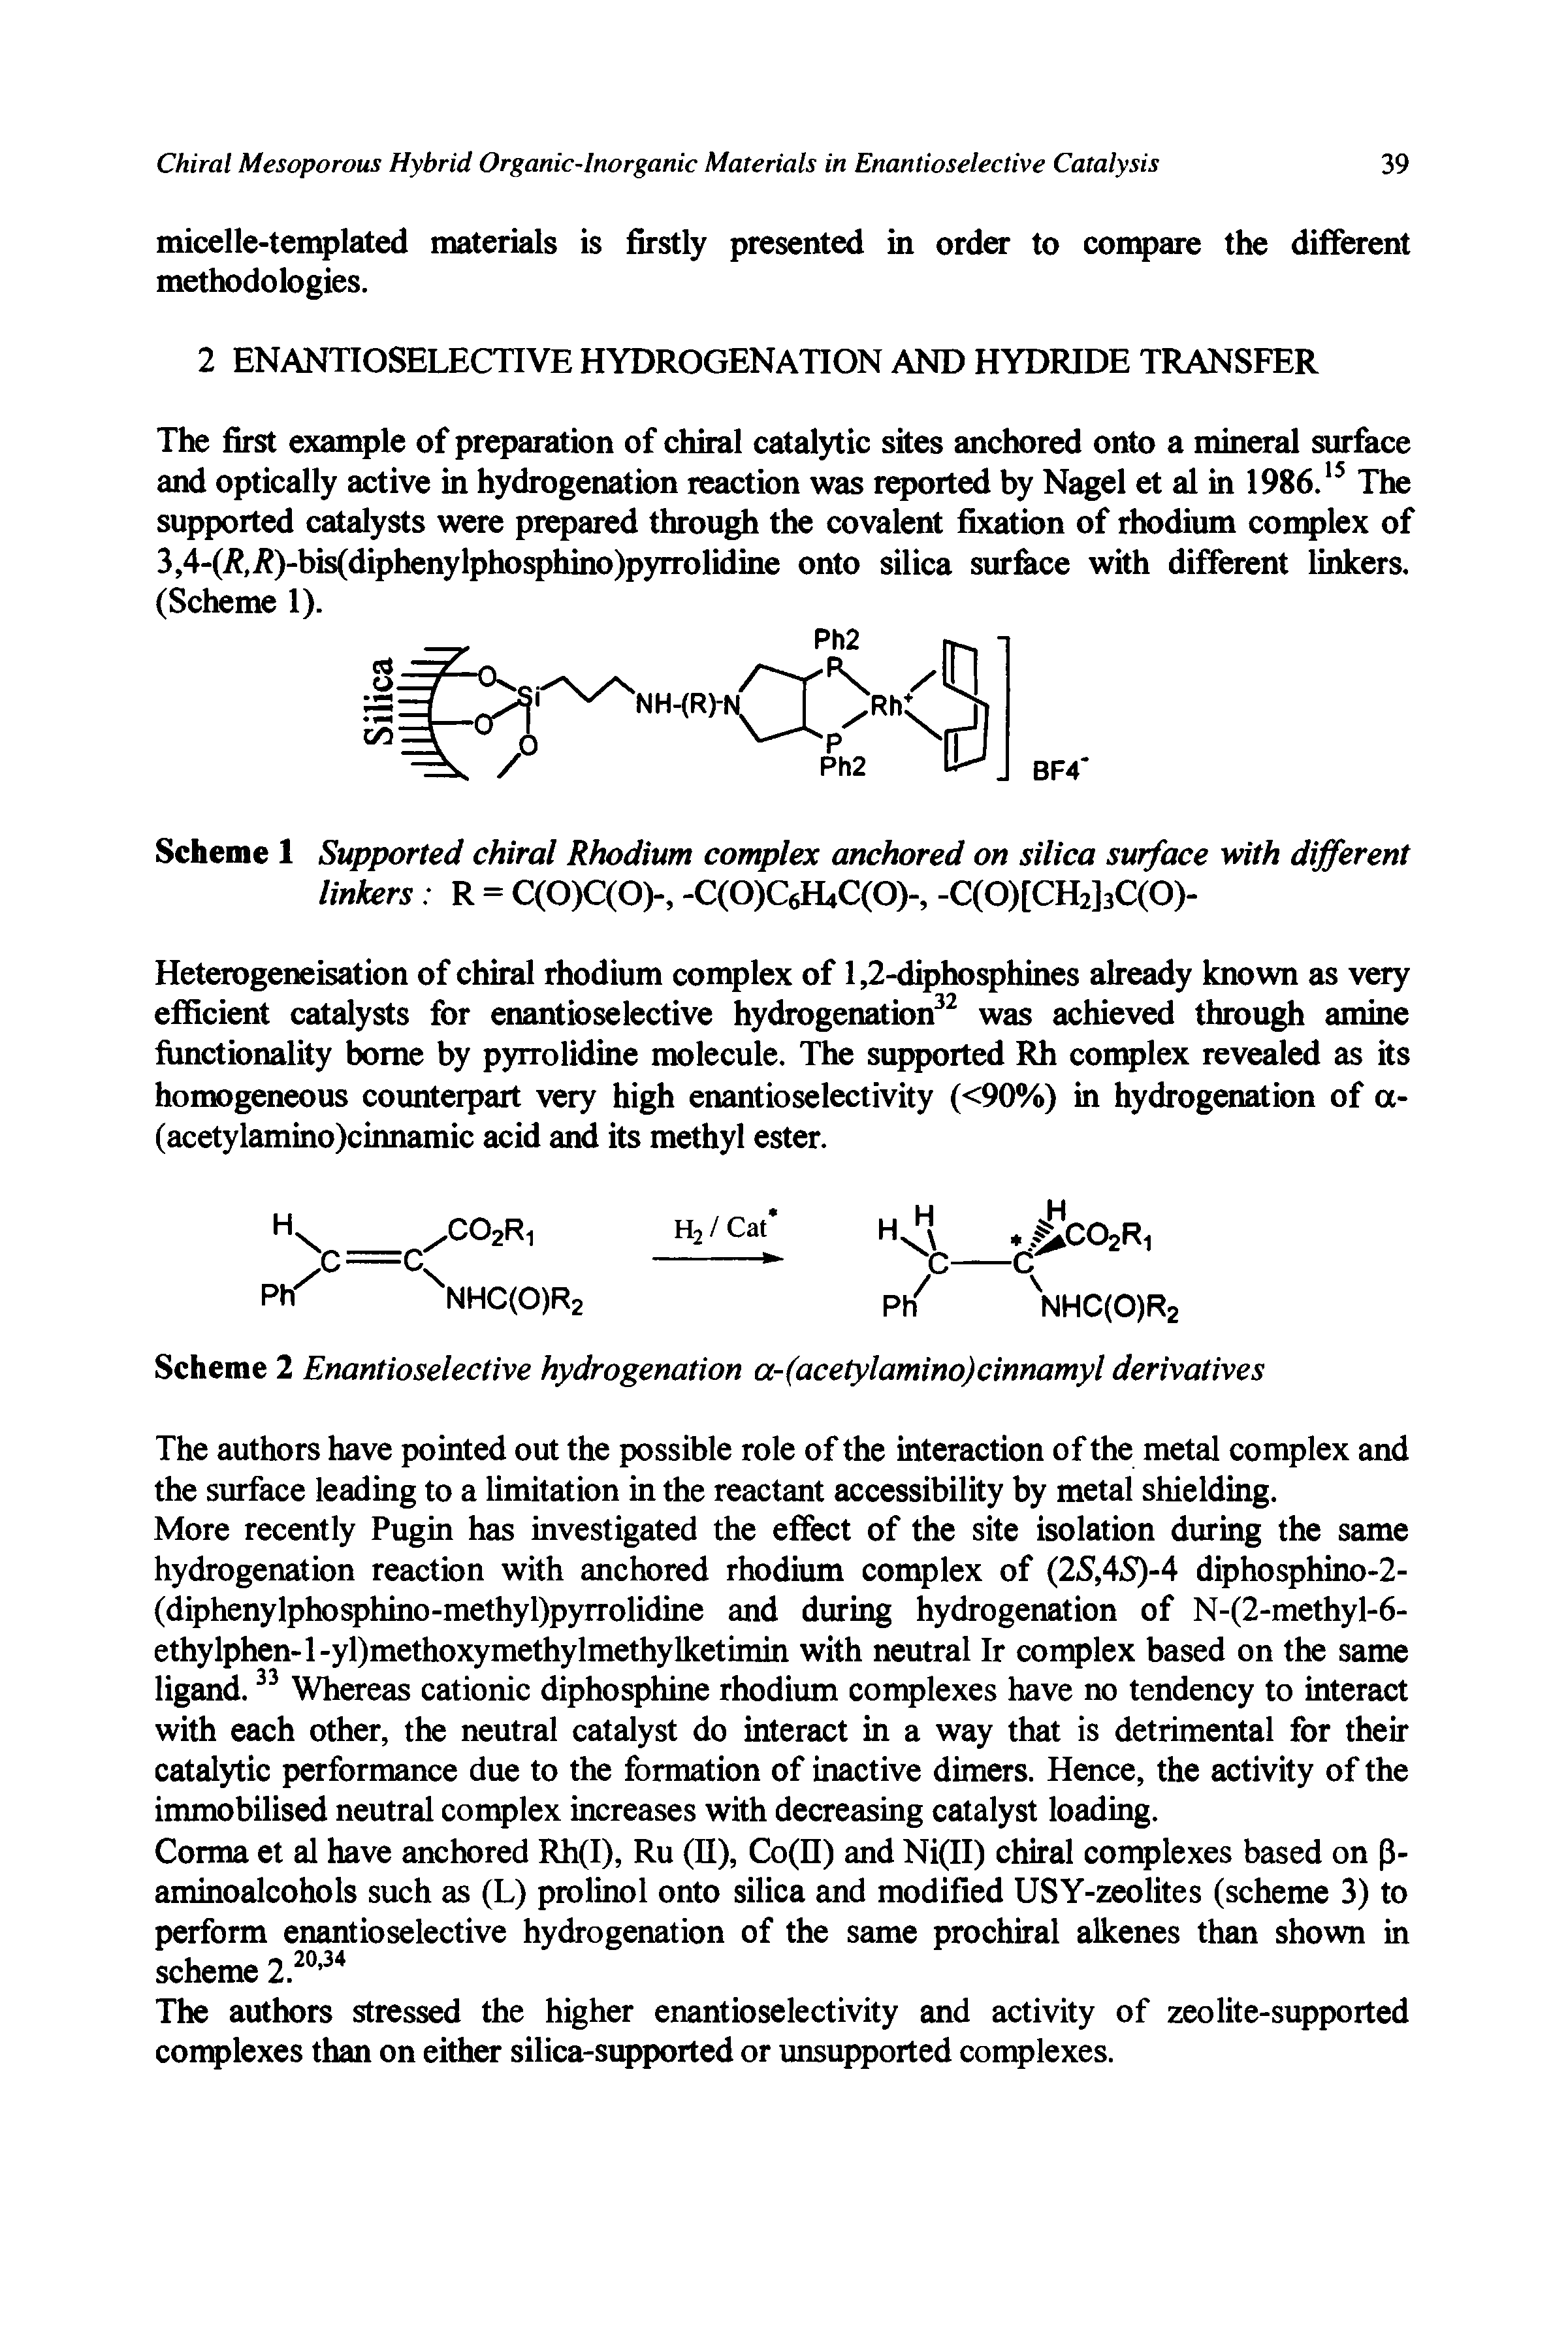 Scheme 2 Enantioselective hydrogenation a-(acetylamino)cinnamyl derivatives...